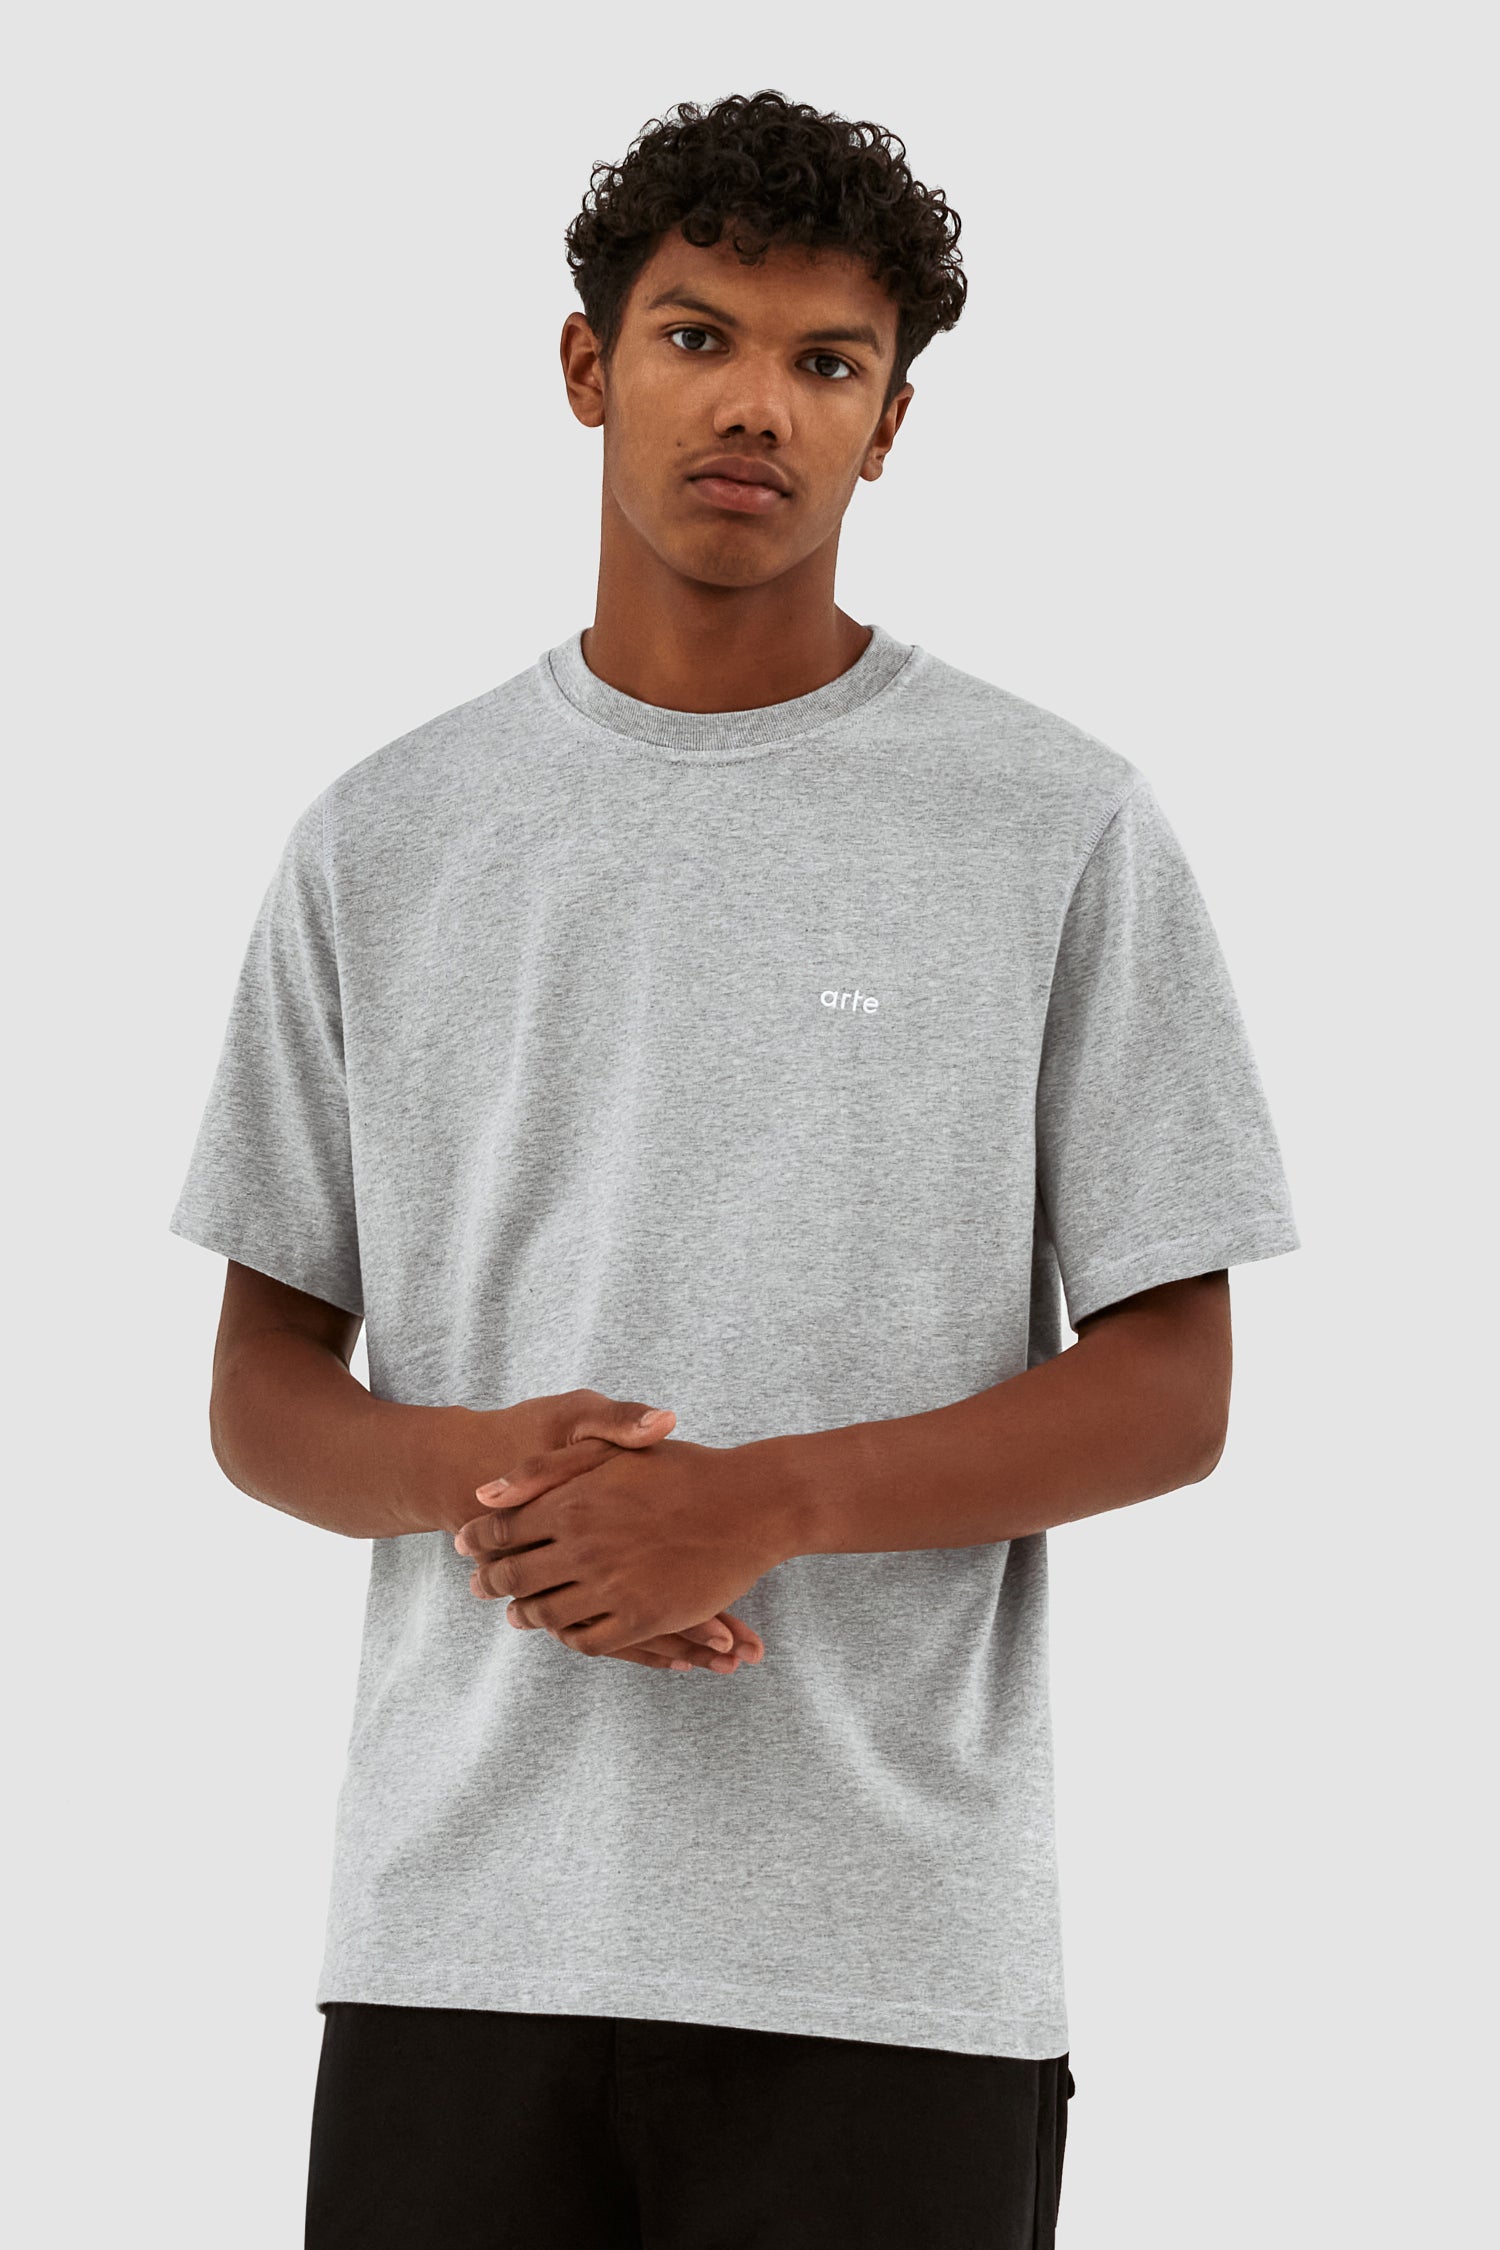 Teo Back Runner T-shirt - Grey